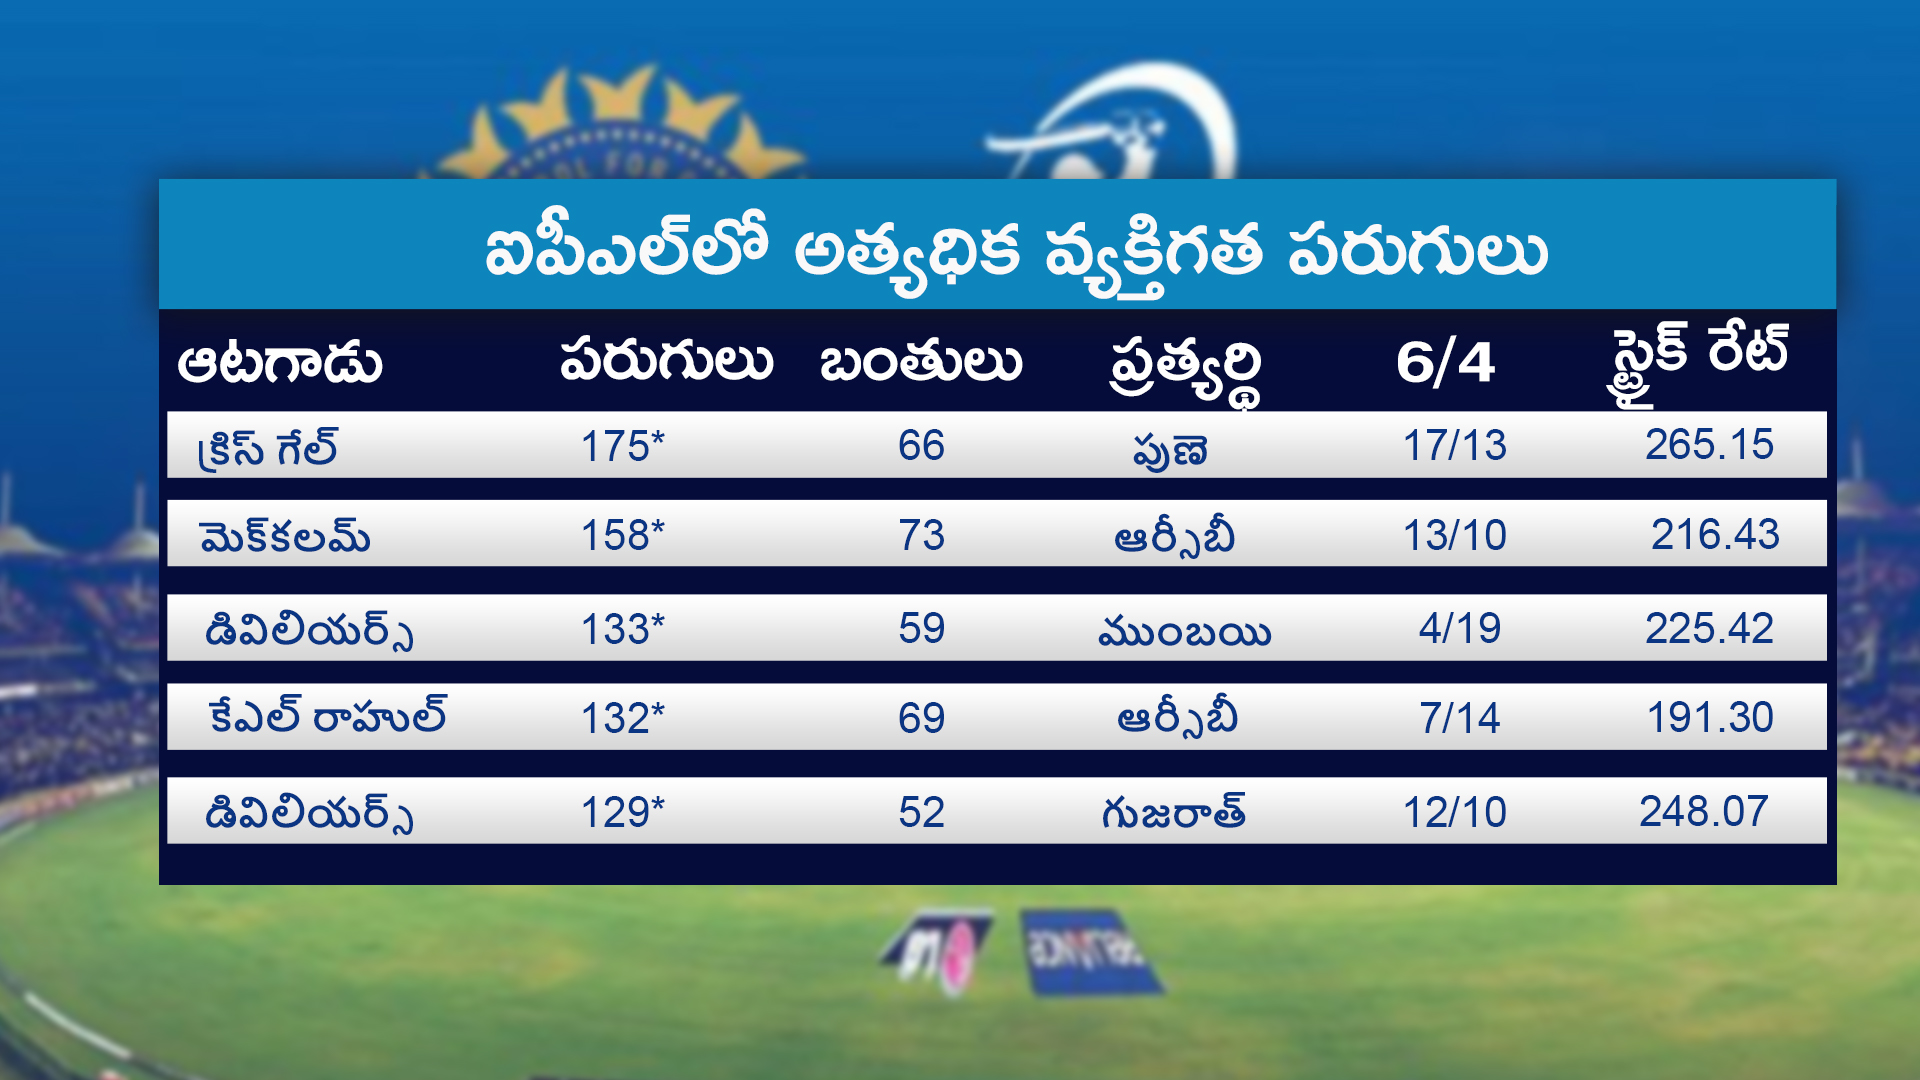 batsmen with highest individual scores in IPL history